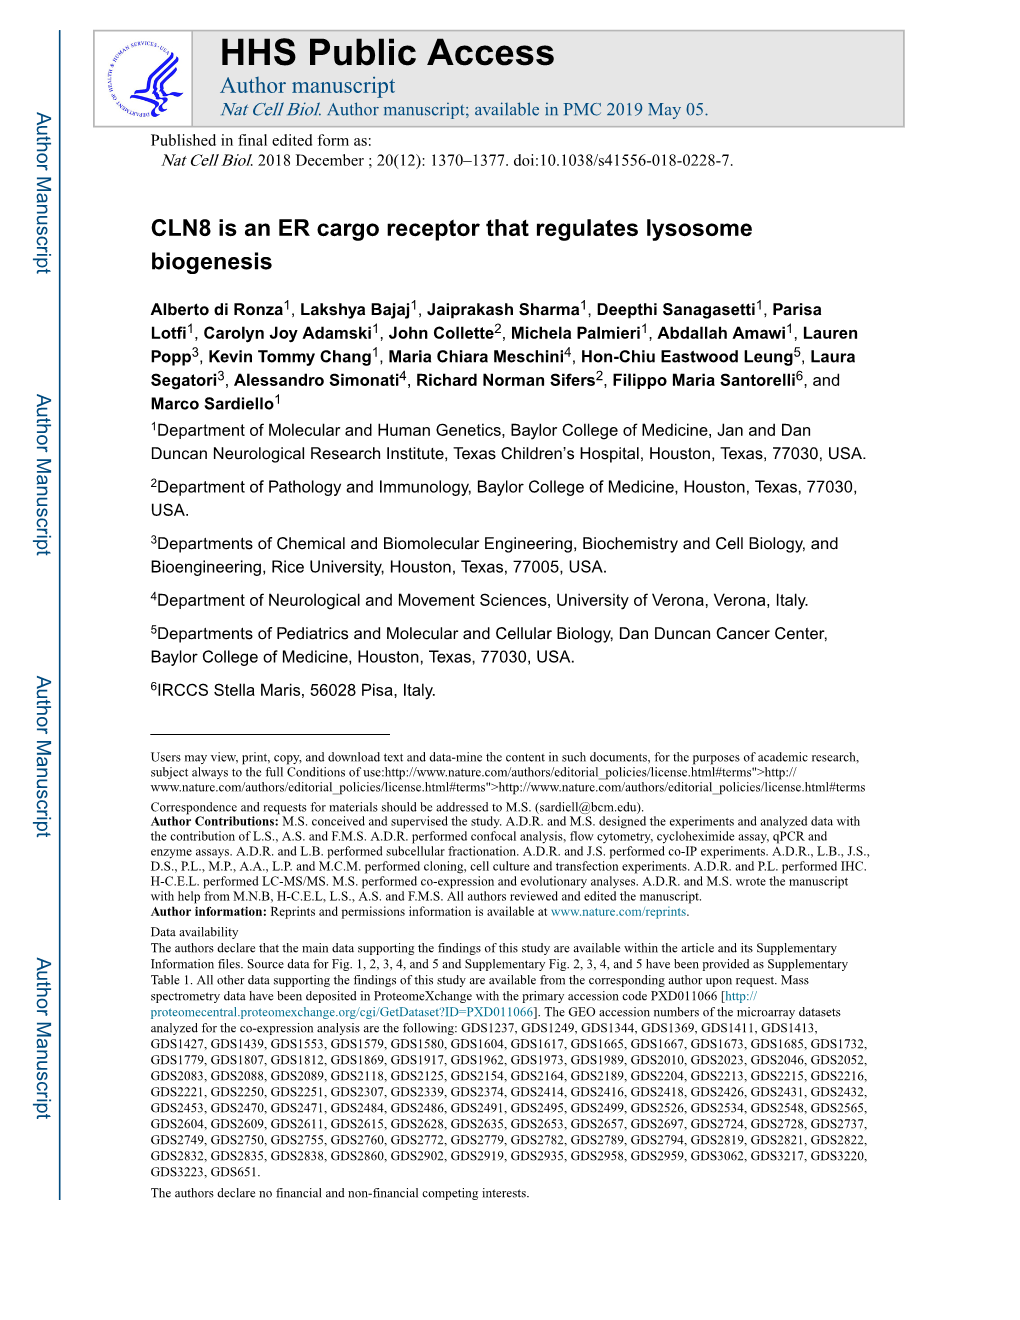 CLN8 Is an ER Cargo Receptor That Regulates Lysosome Biogenesis